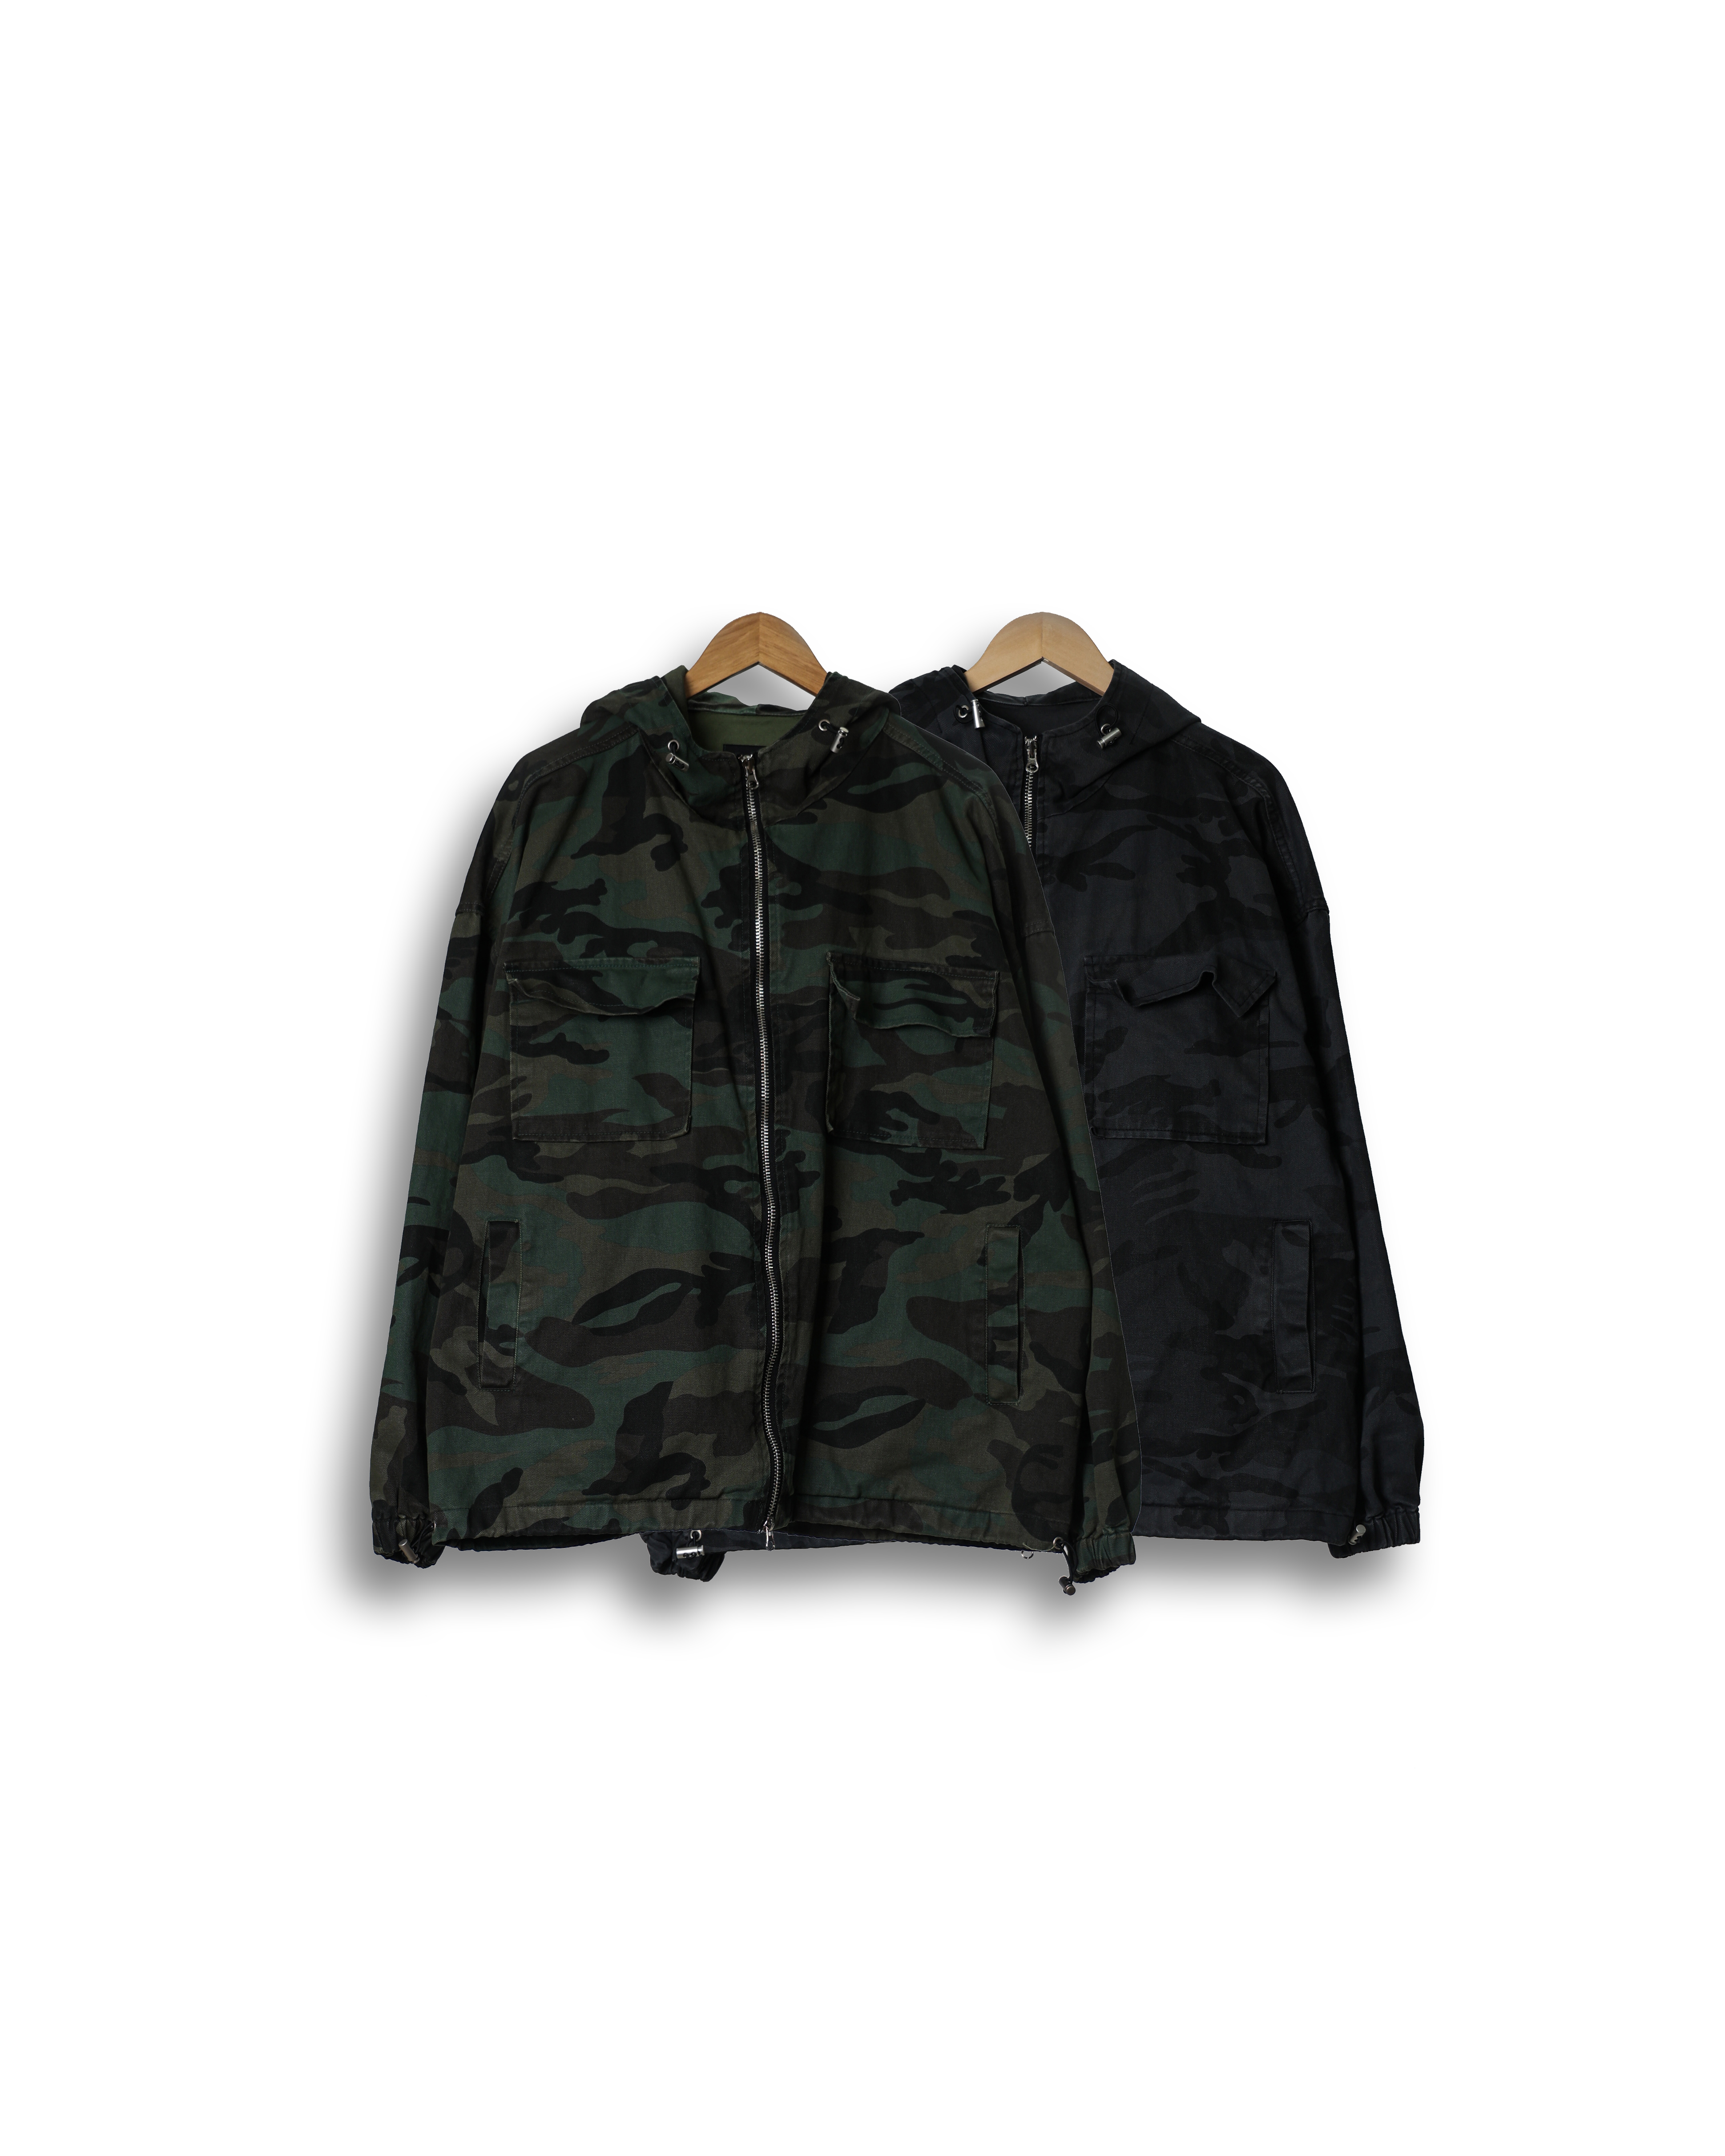 MIPI Camo Military Over Hoodie Jacket (Charcoal/Khaki)